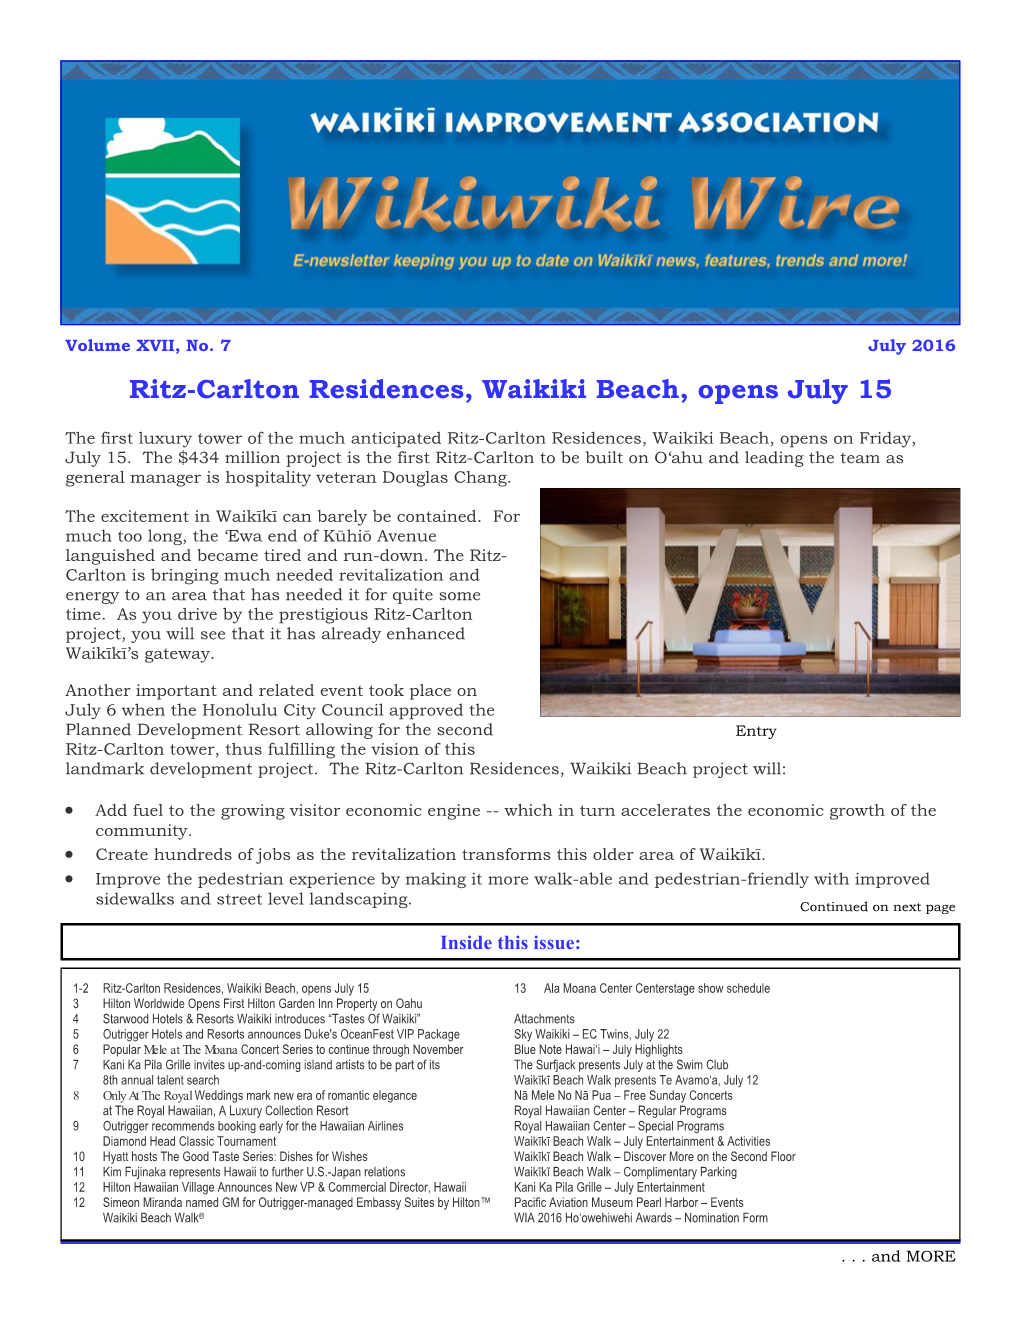 Ritz-Carlton Residences, Waikiki Beach, Opens July 15